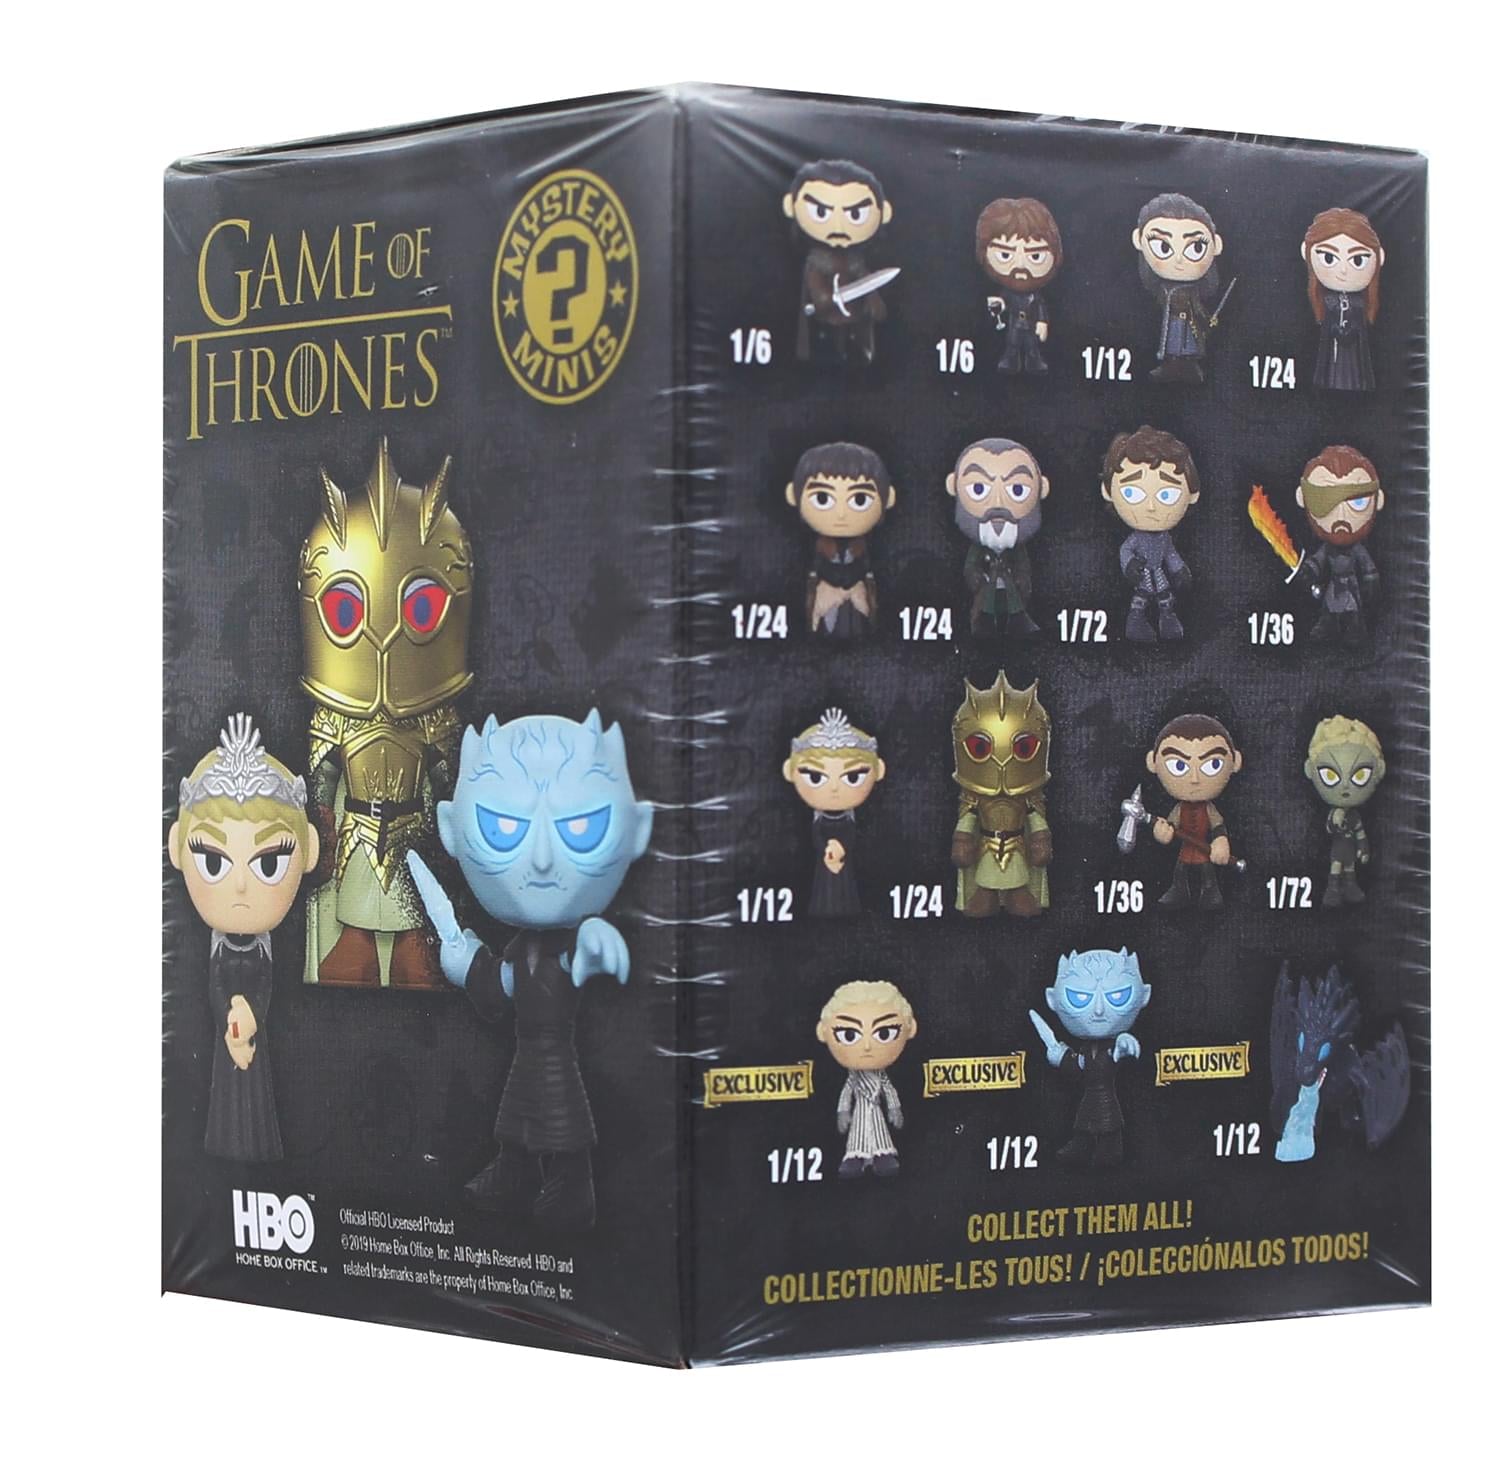 Game of Thrones Final Season Funko Mystery Mini Blind Boxed Mini Figure - One Random